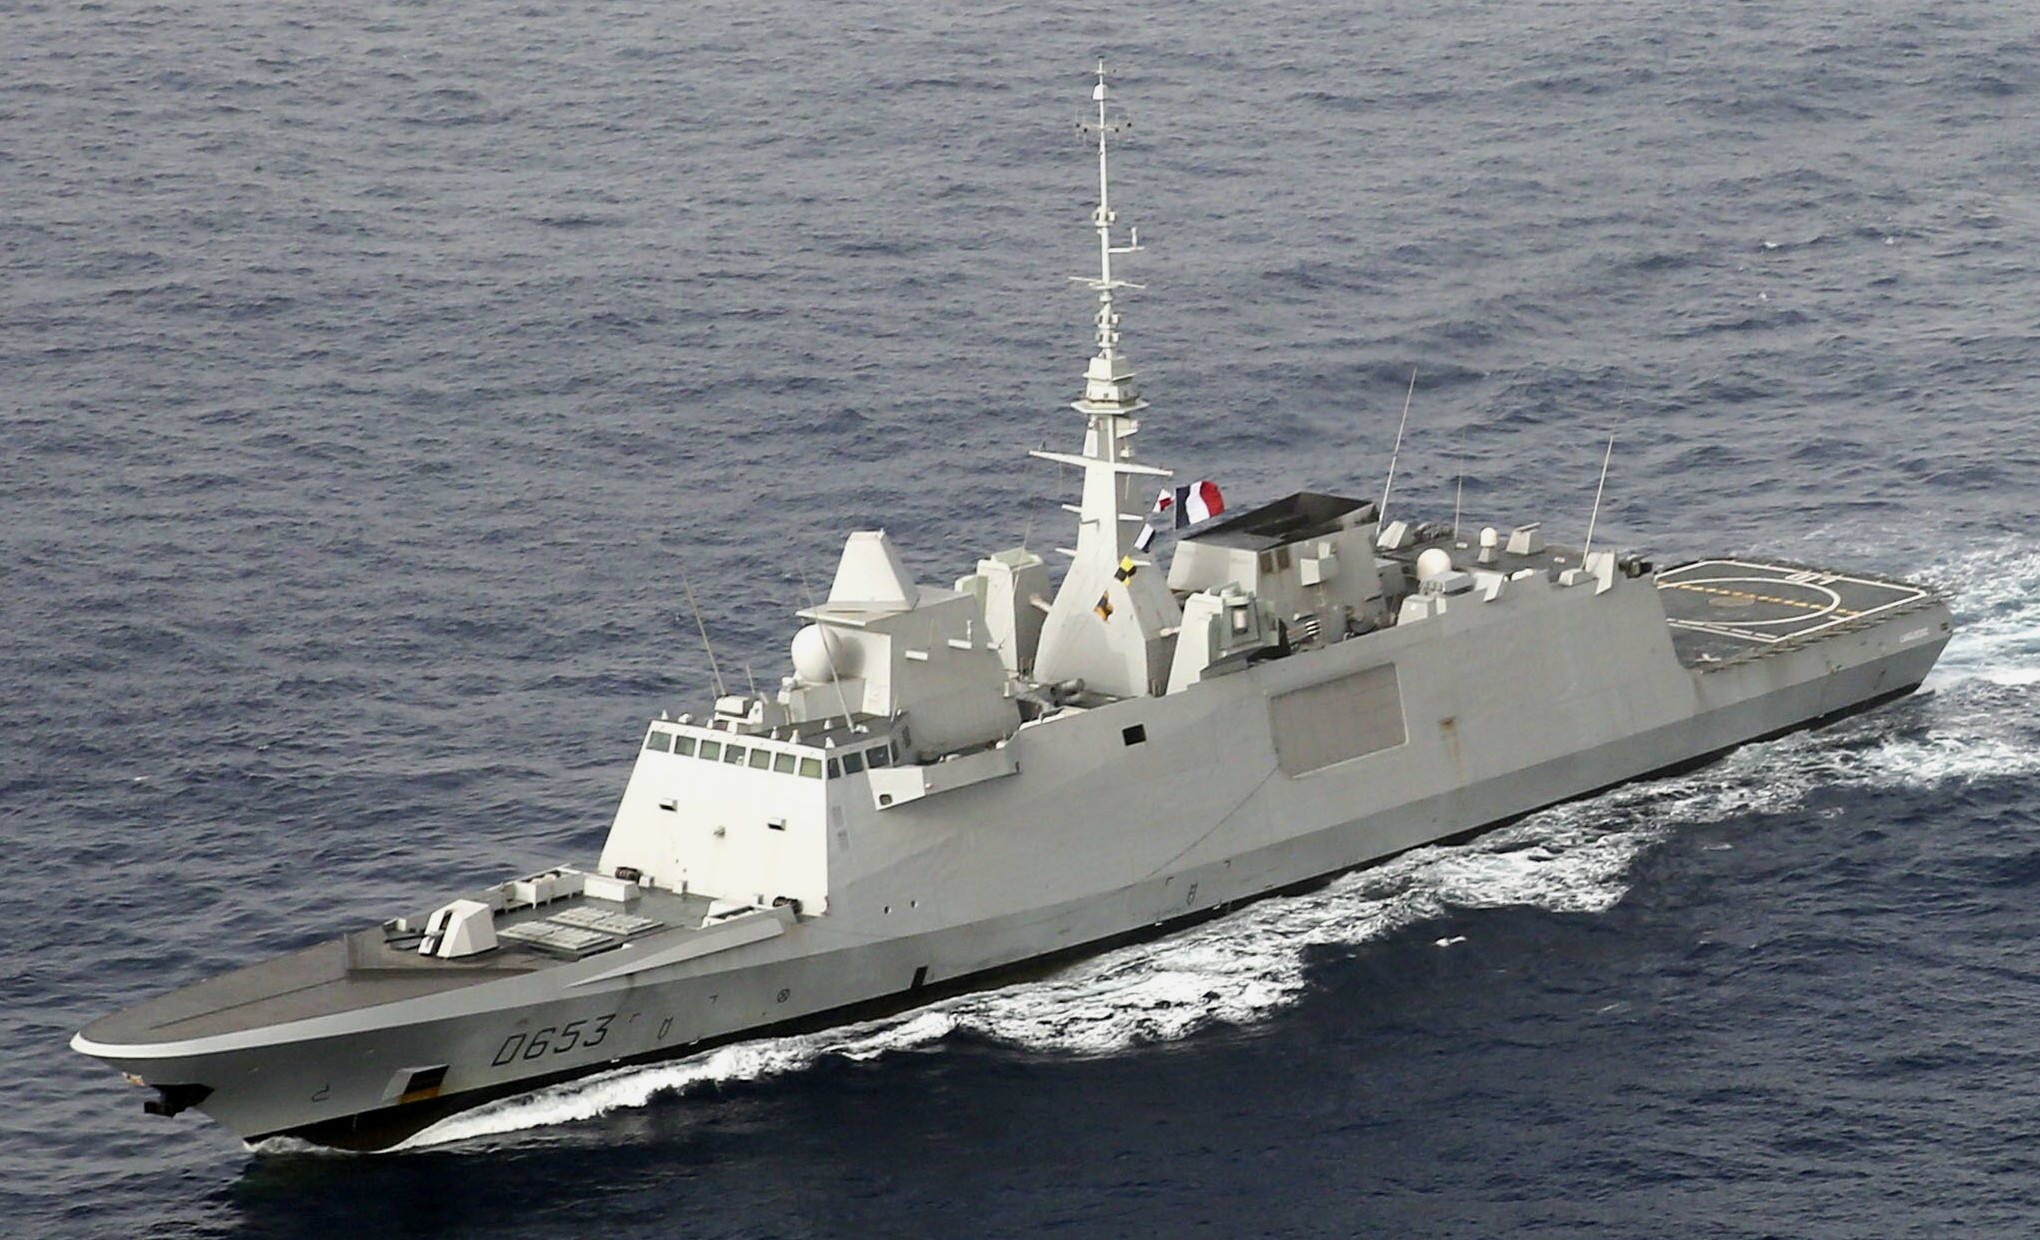 d-653 fs languedoc fremm aquitaine class frigate fregate multi purpose french navy marine nationale 12